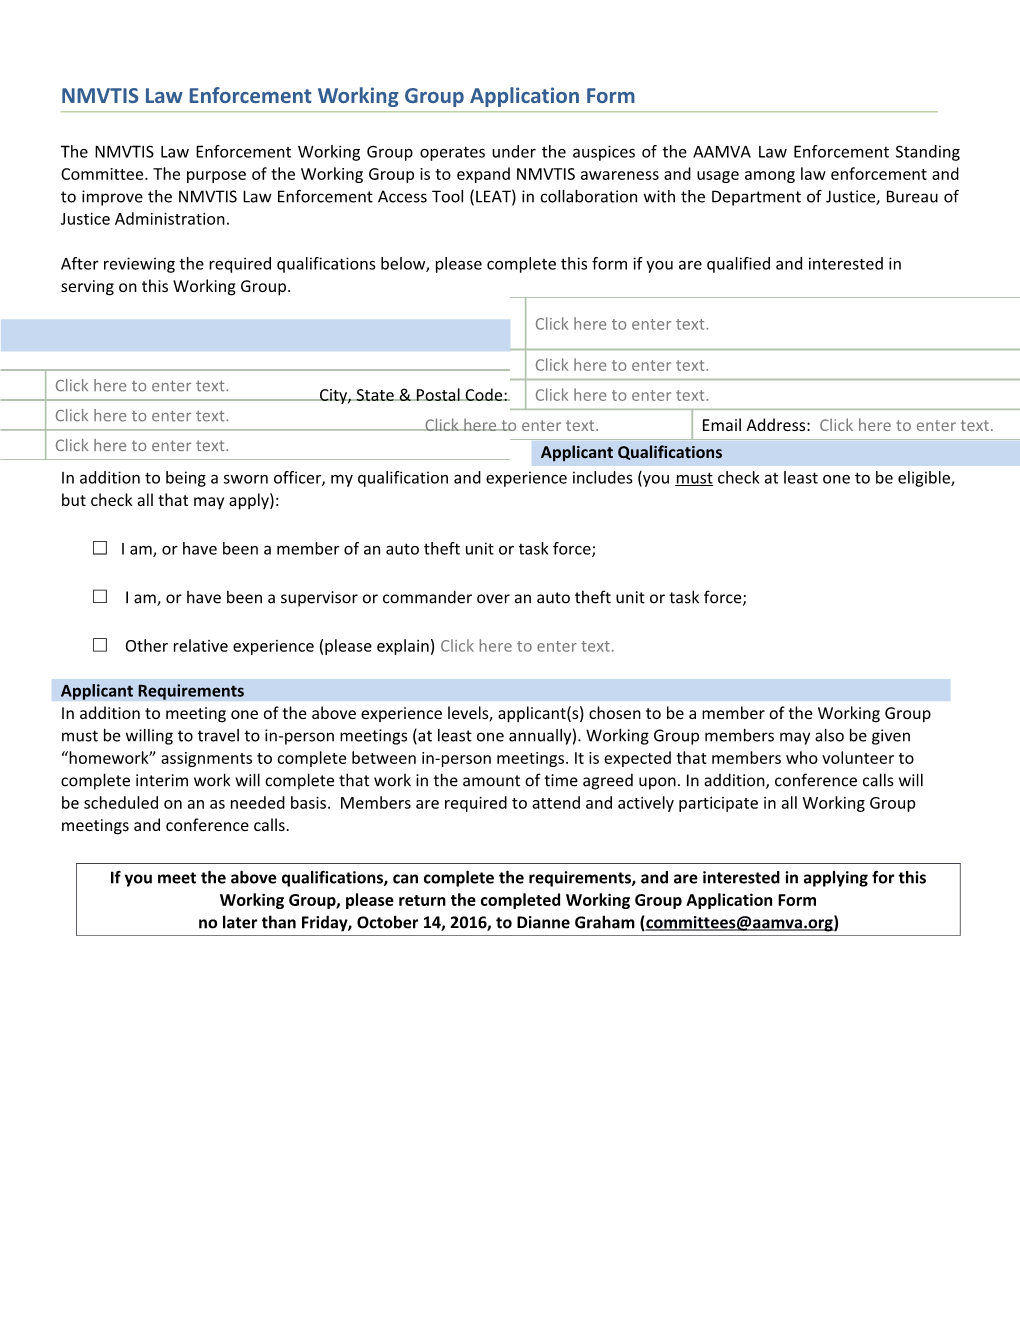 NMVTIS Law Enforcement Working Group Application Form